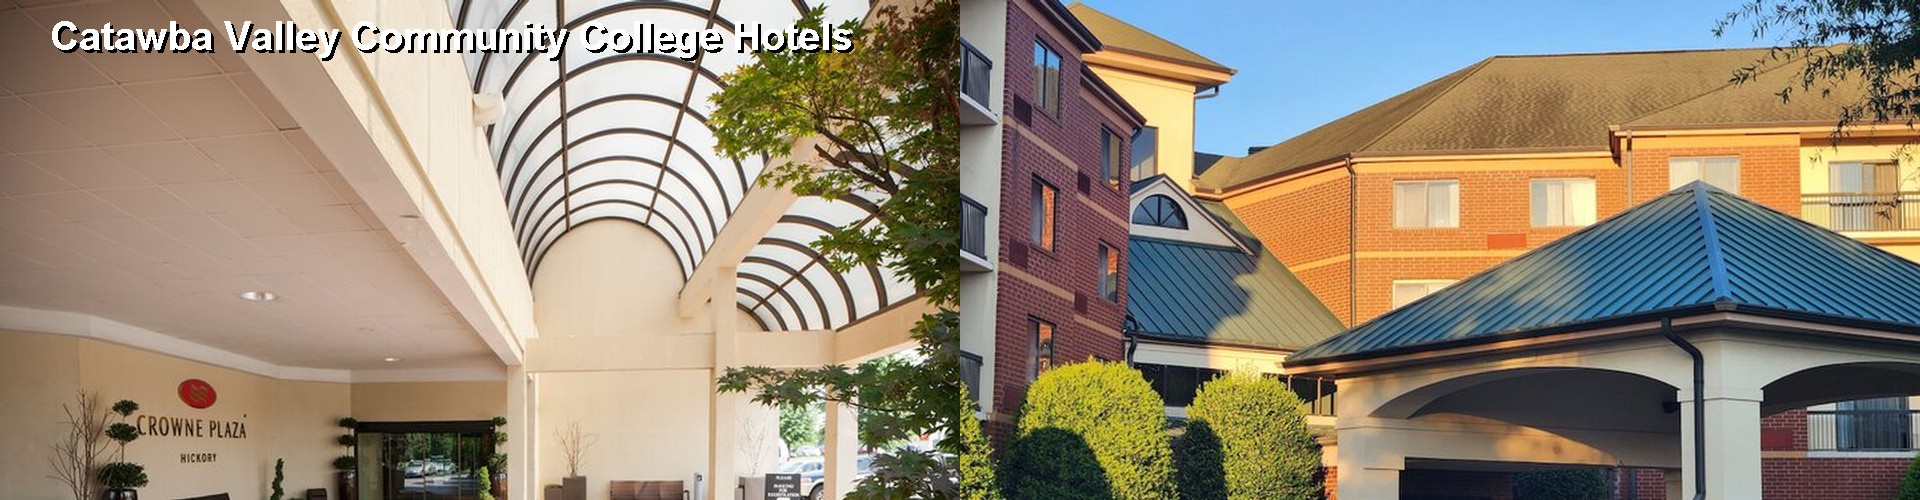 5 Best Hotels near Catawba Valley Community College